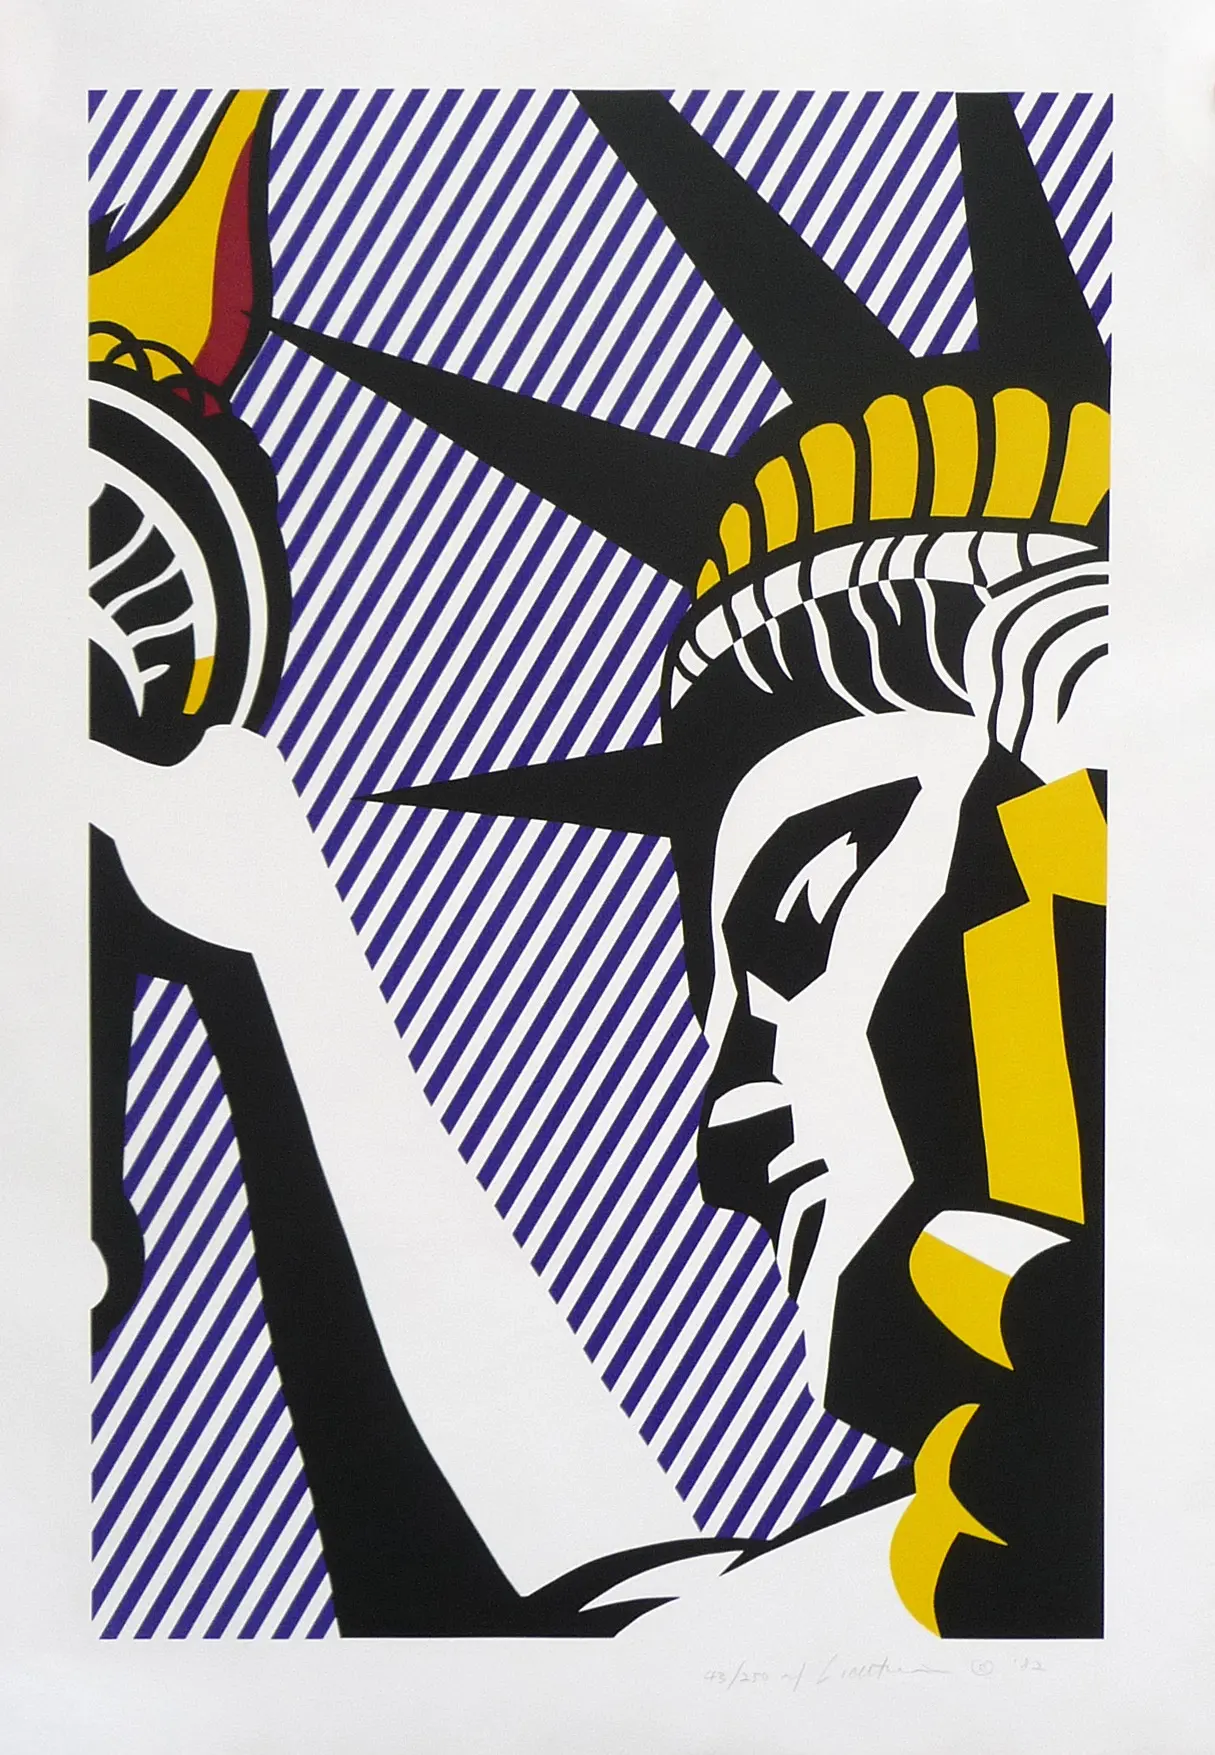 Statue of Liberty art deco poster.